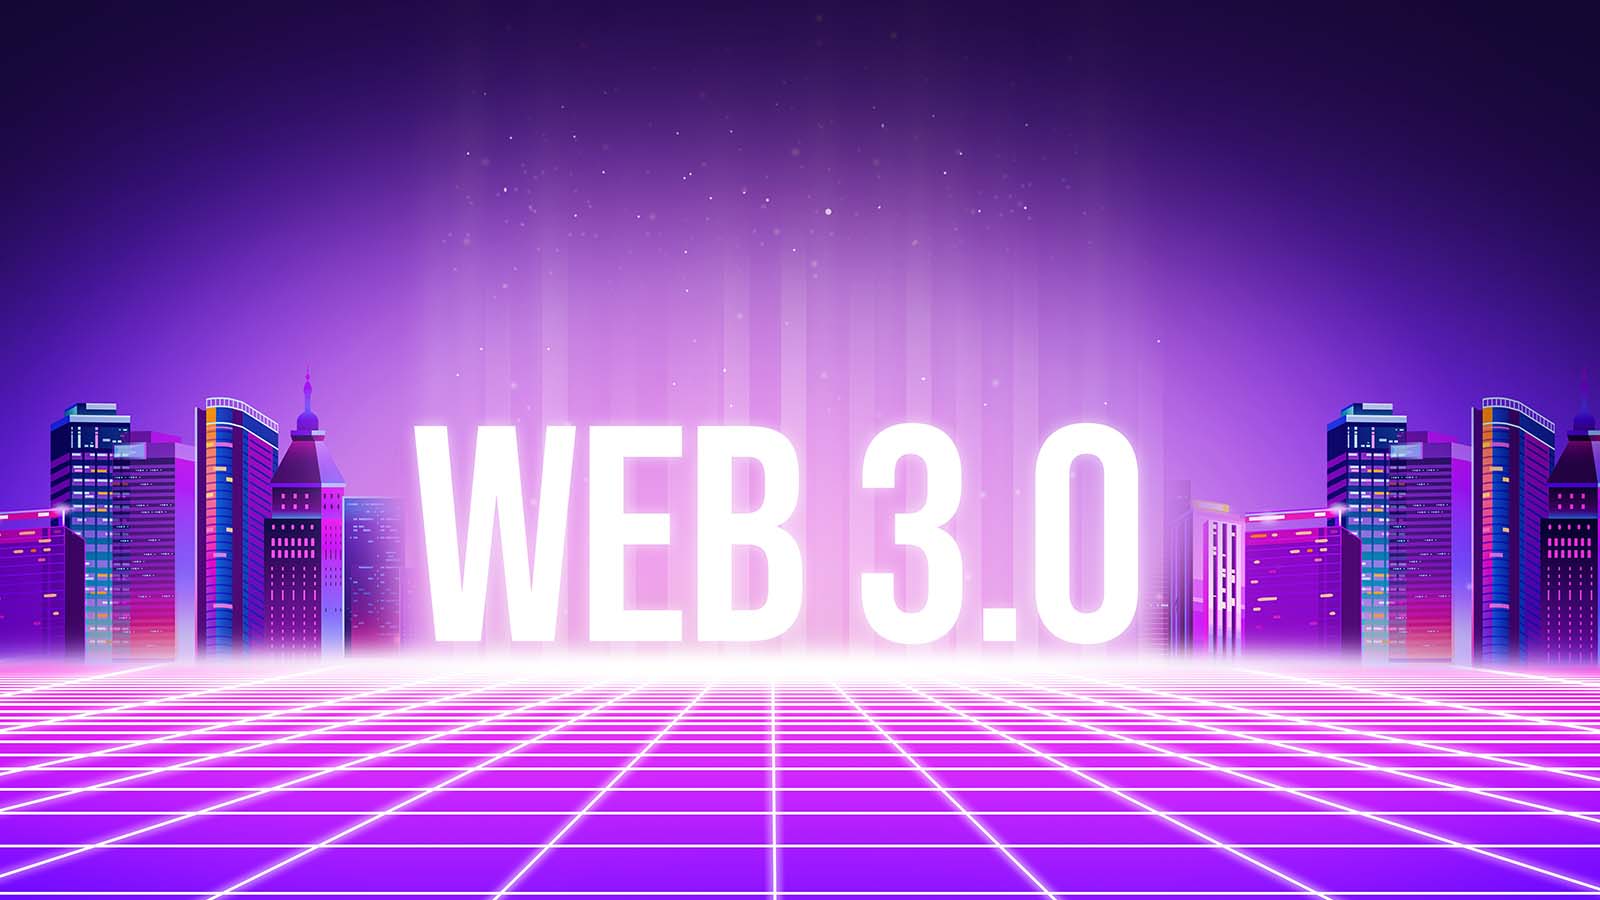 Introducing Web 3.0 and Virtual Reality